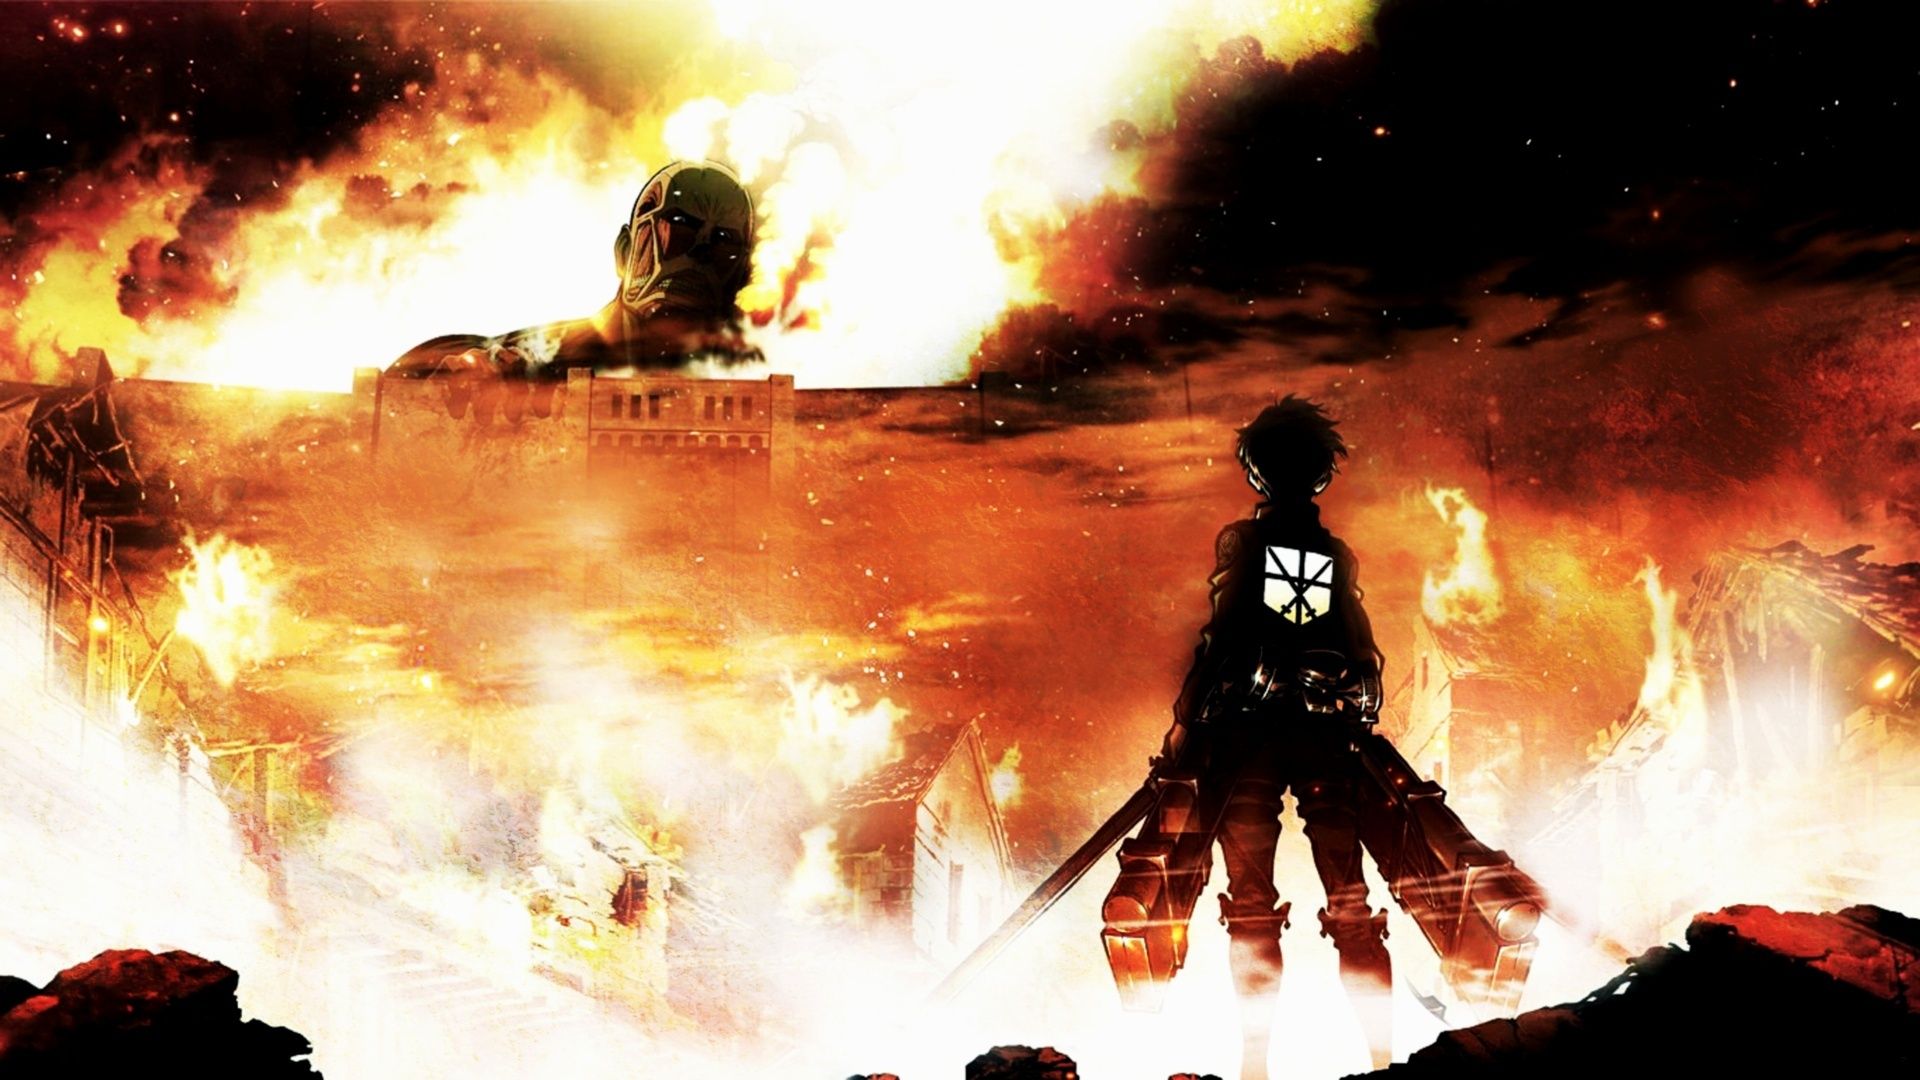 Attack on Titan background